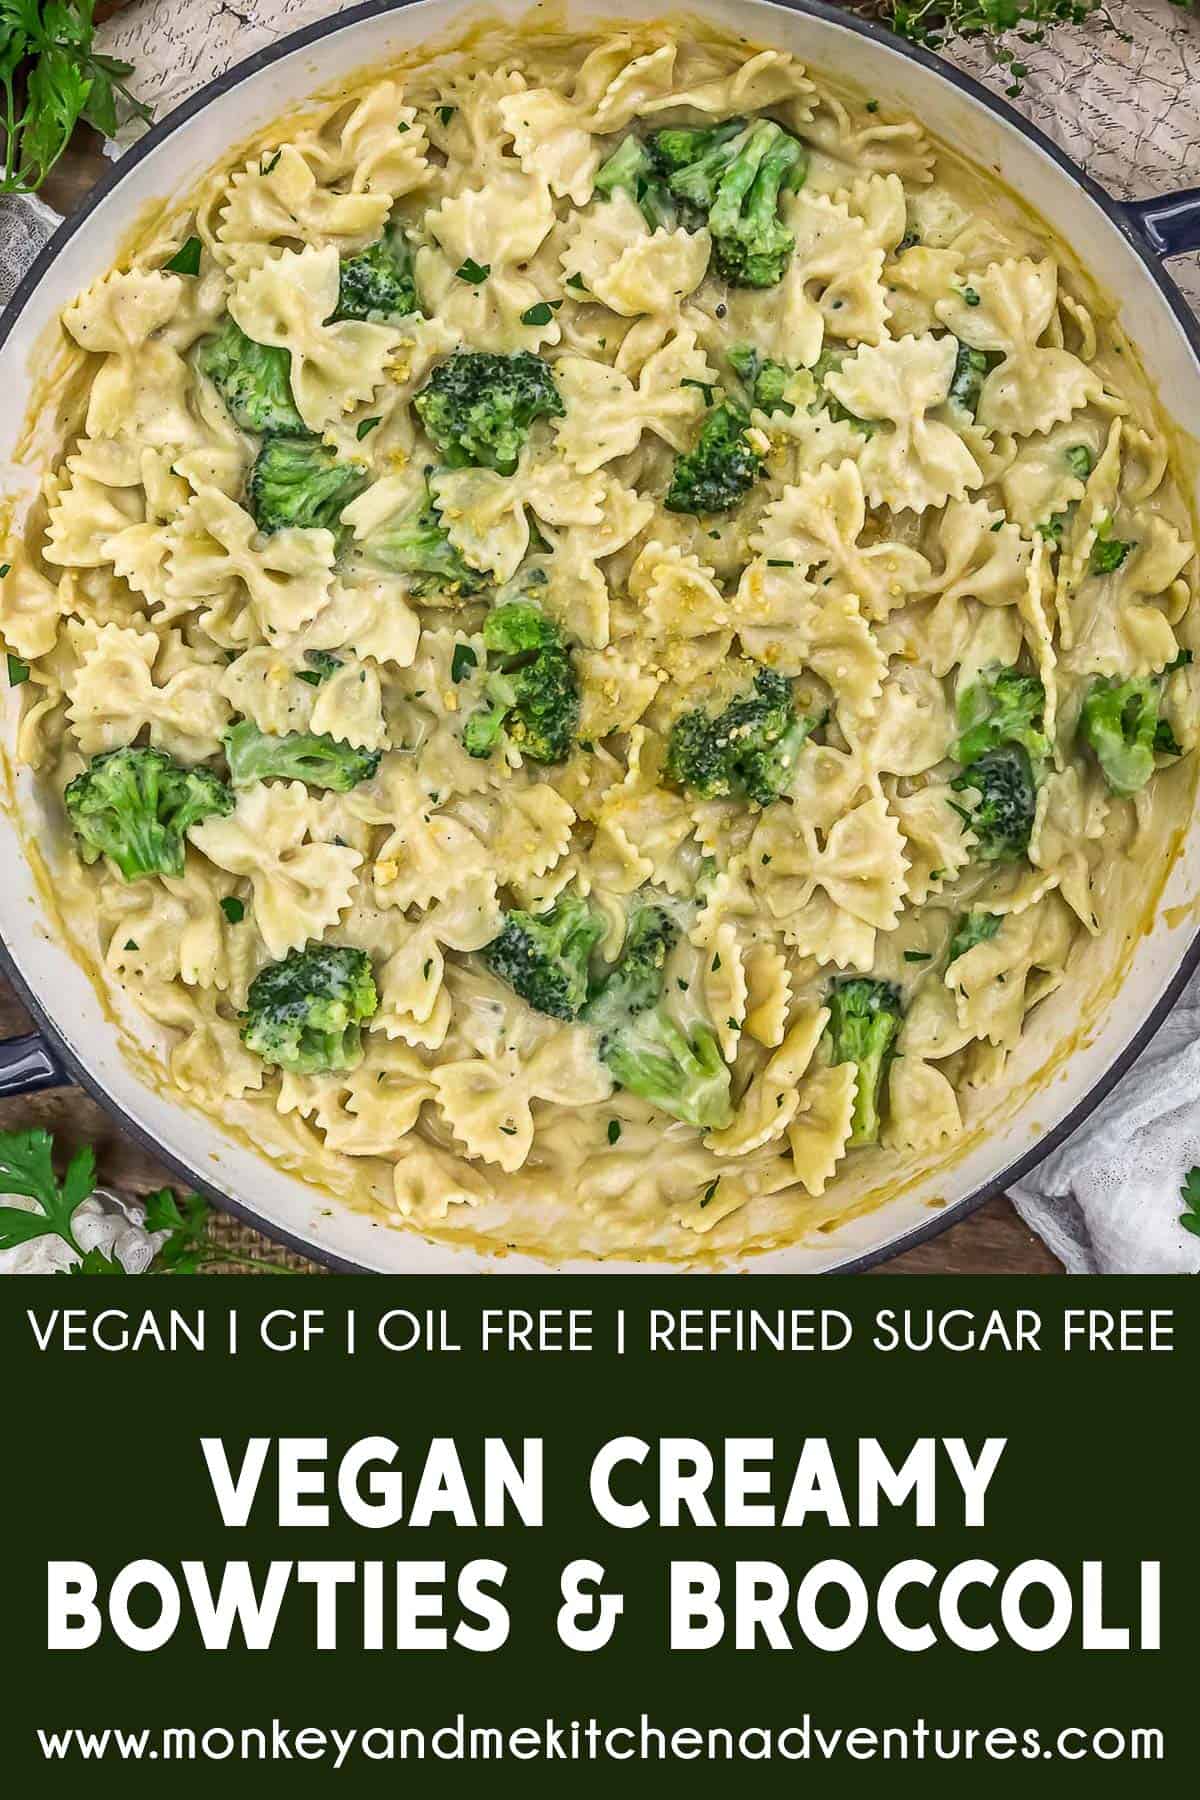 Vegan Creamy Bowties and Broccoli with text description